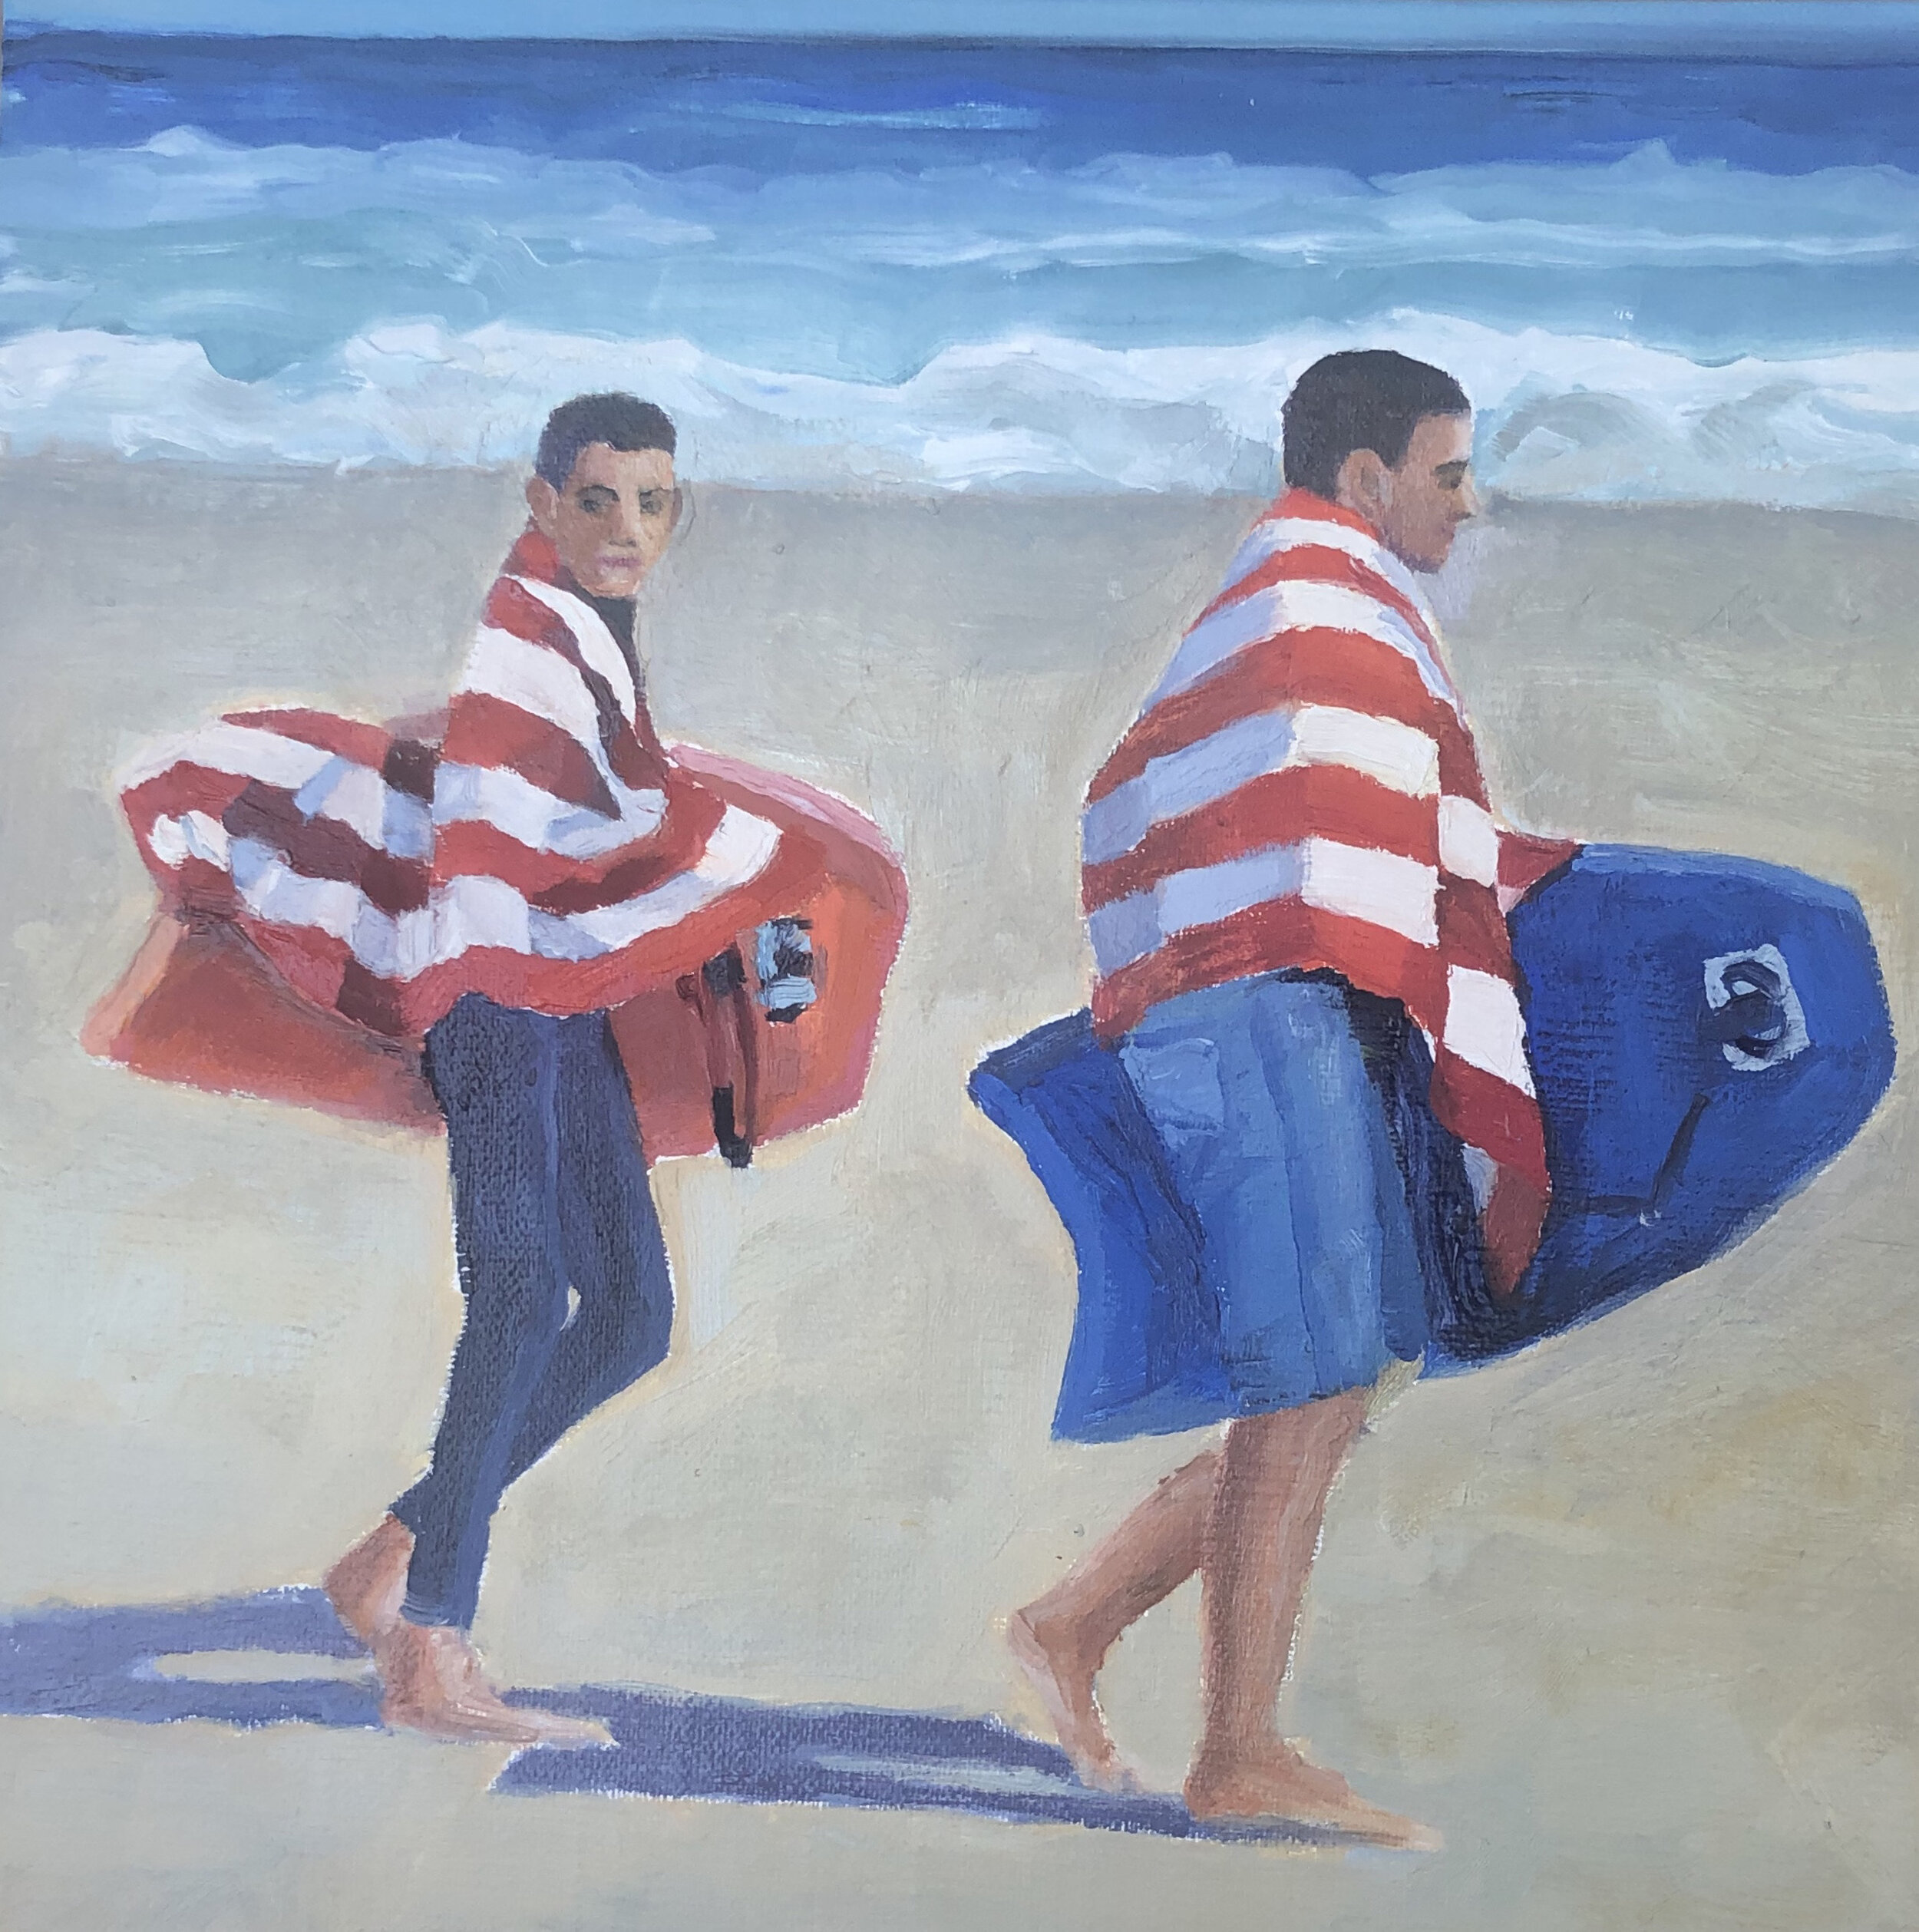 Summer Stripes: Surfers